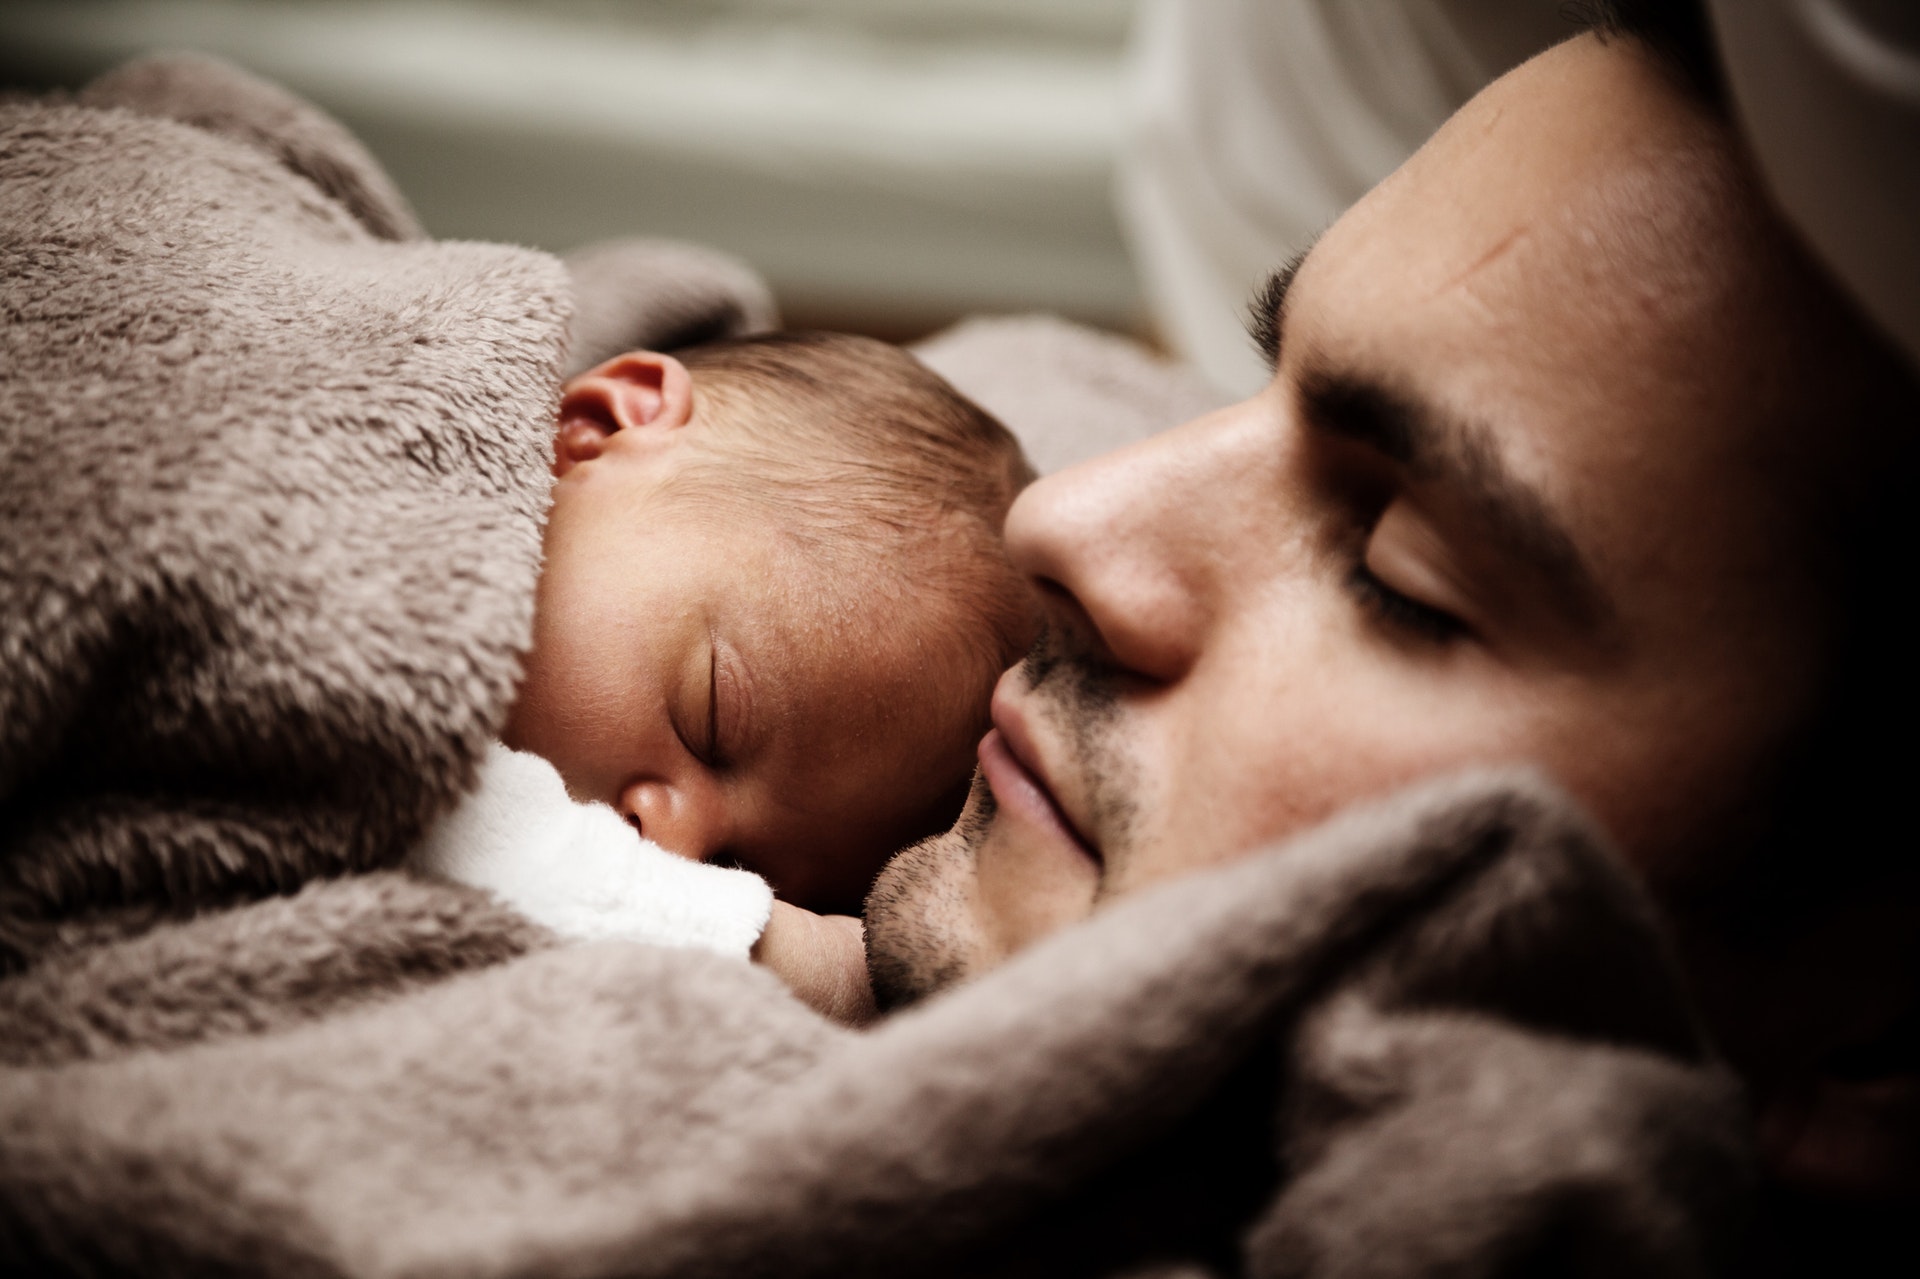 dads and birth trauma